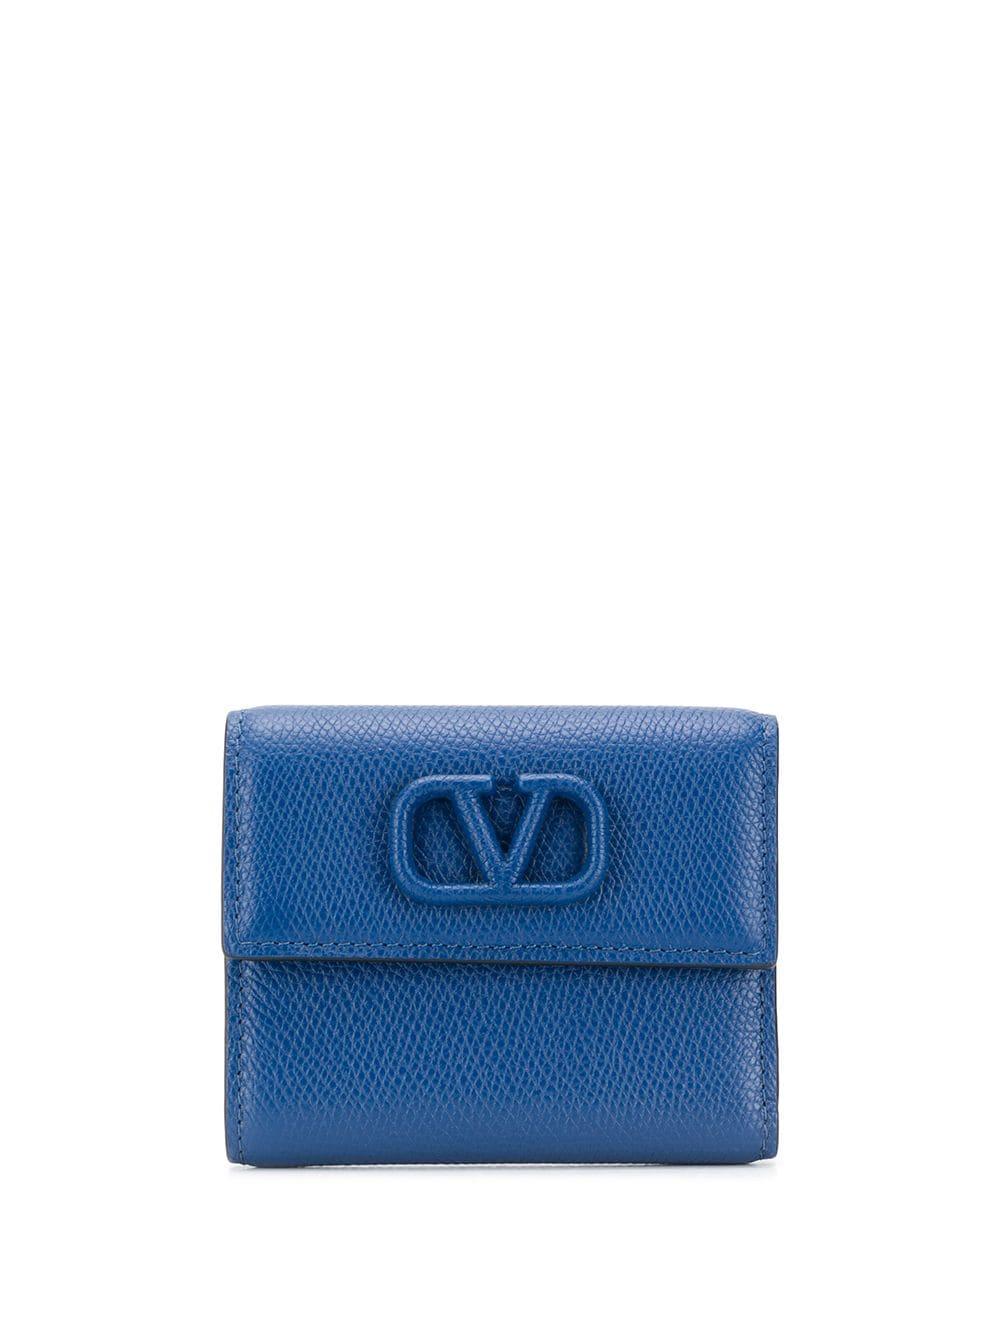 Valentino Garavani Leather Small Vsling Wallet in Blue - Lyst